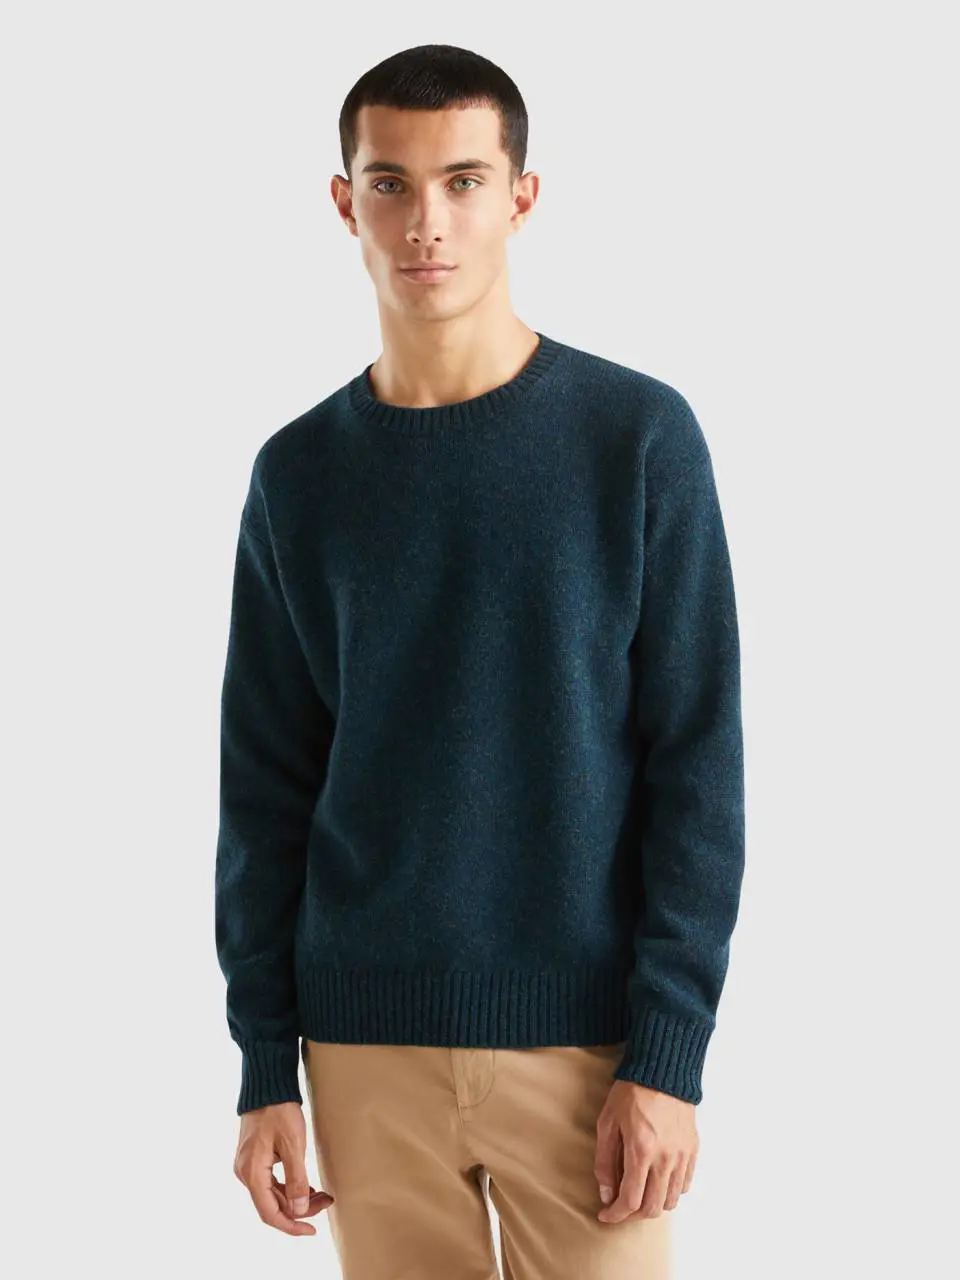 Benetton crew neck sweater in pure shetland wool. 1